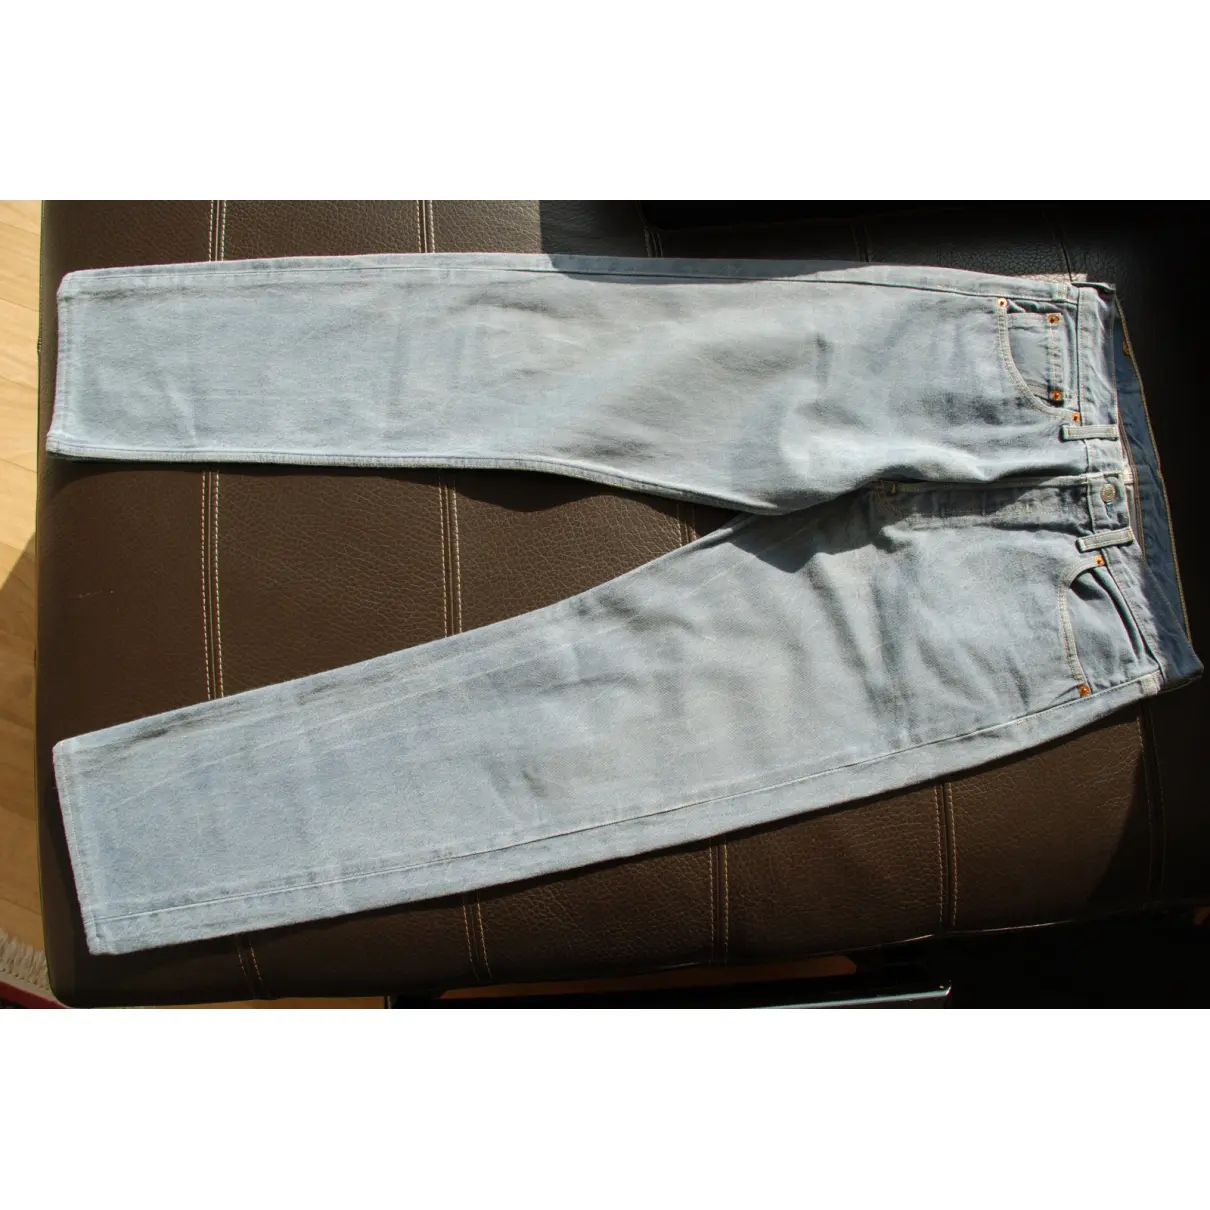 Levi's Straight jeans for sale - Vintage